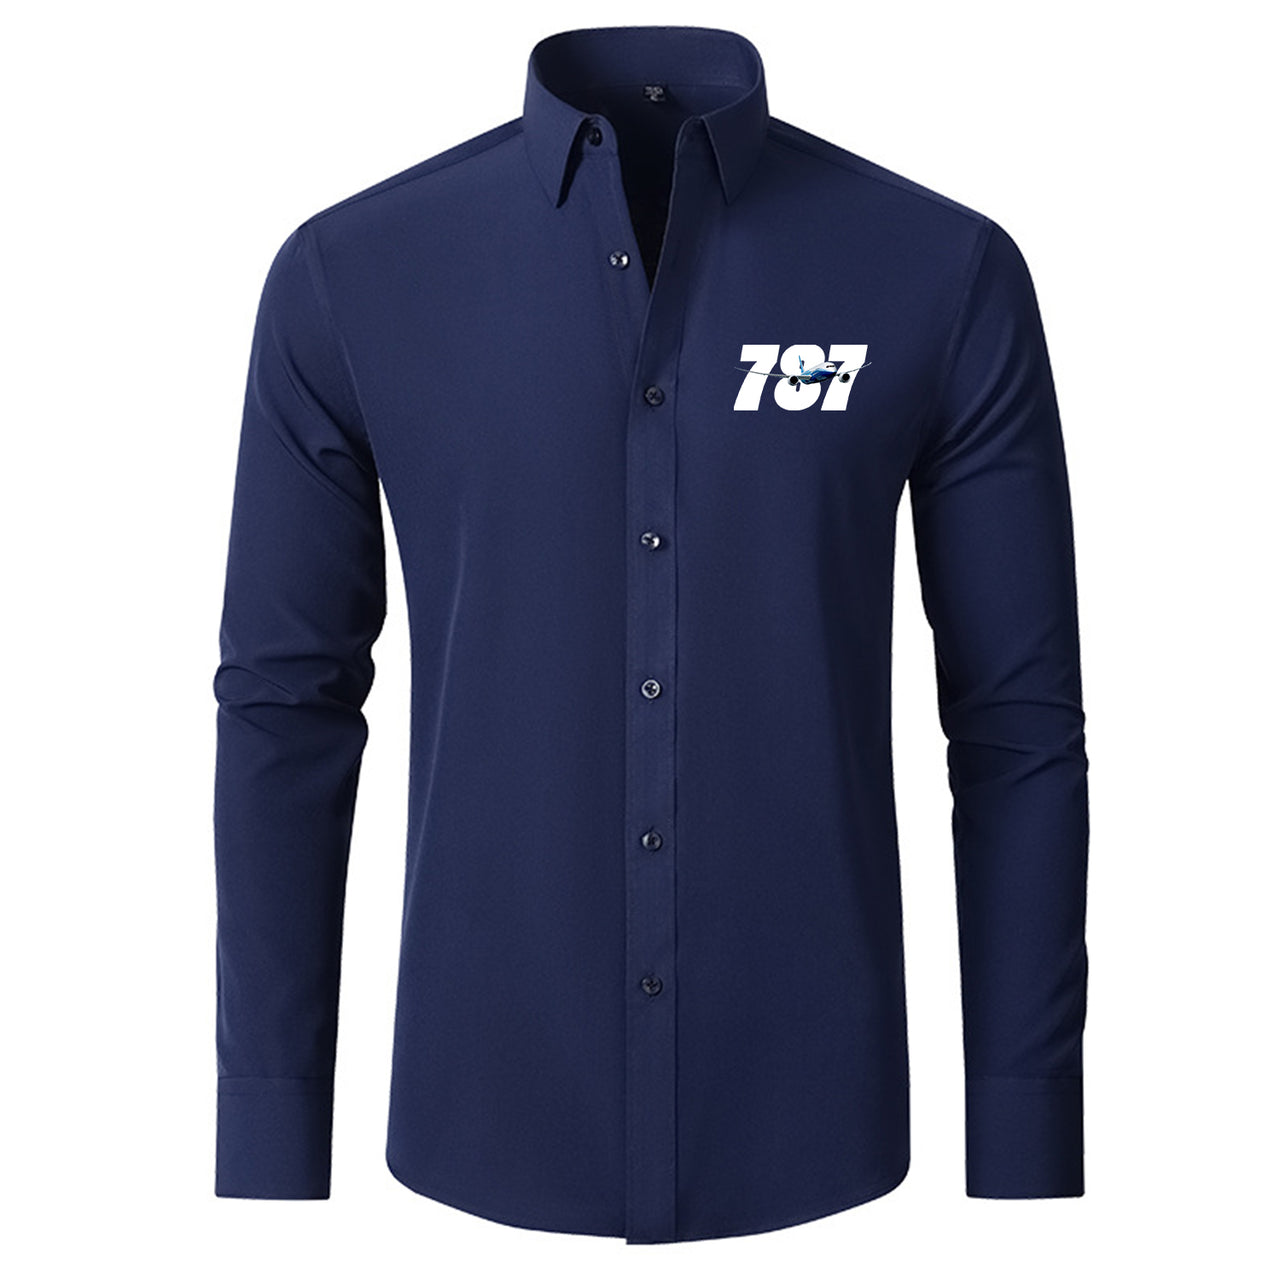 Super Boeing 787 Designed Long Sleeve Shirts